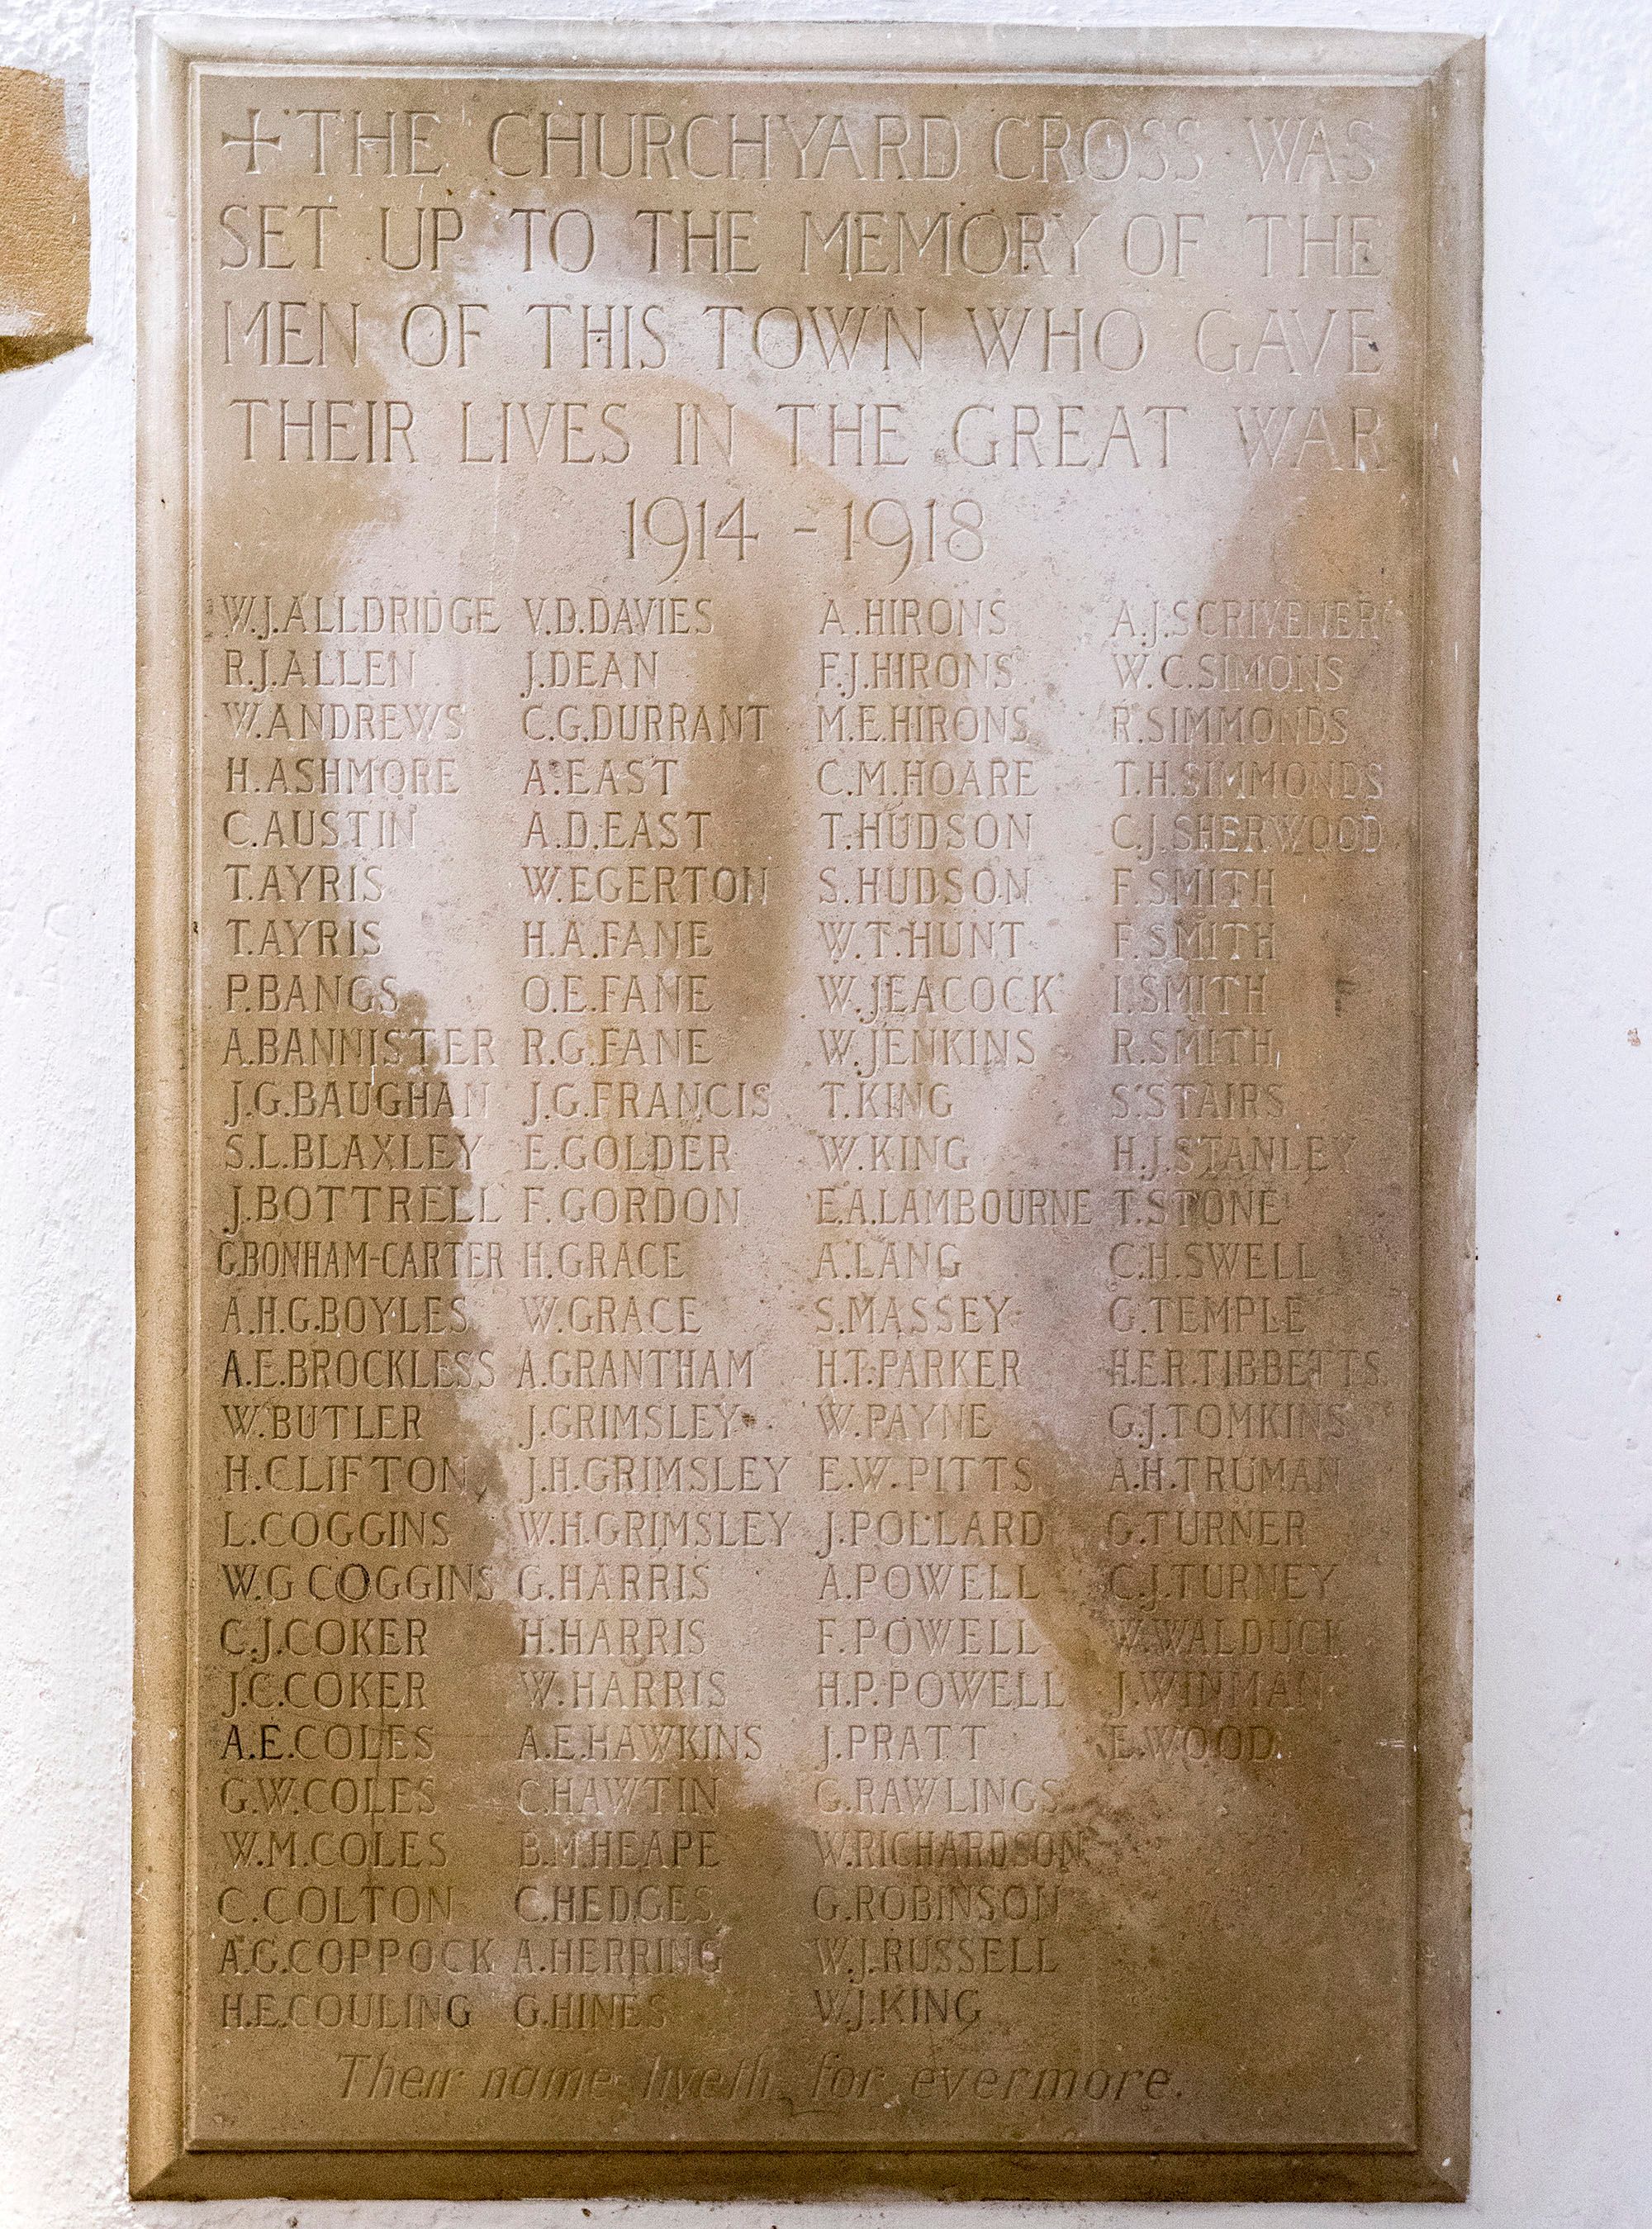 Memorial tablet in St Edburg's Church porch.